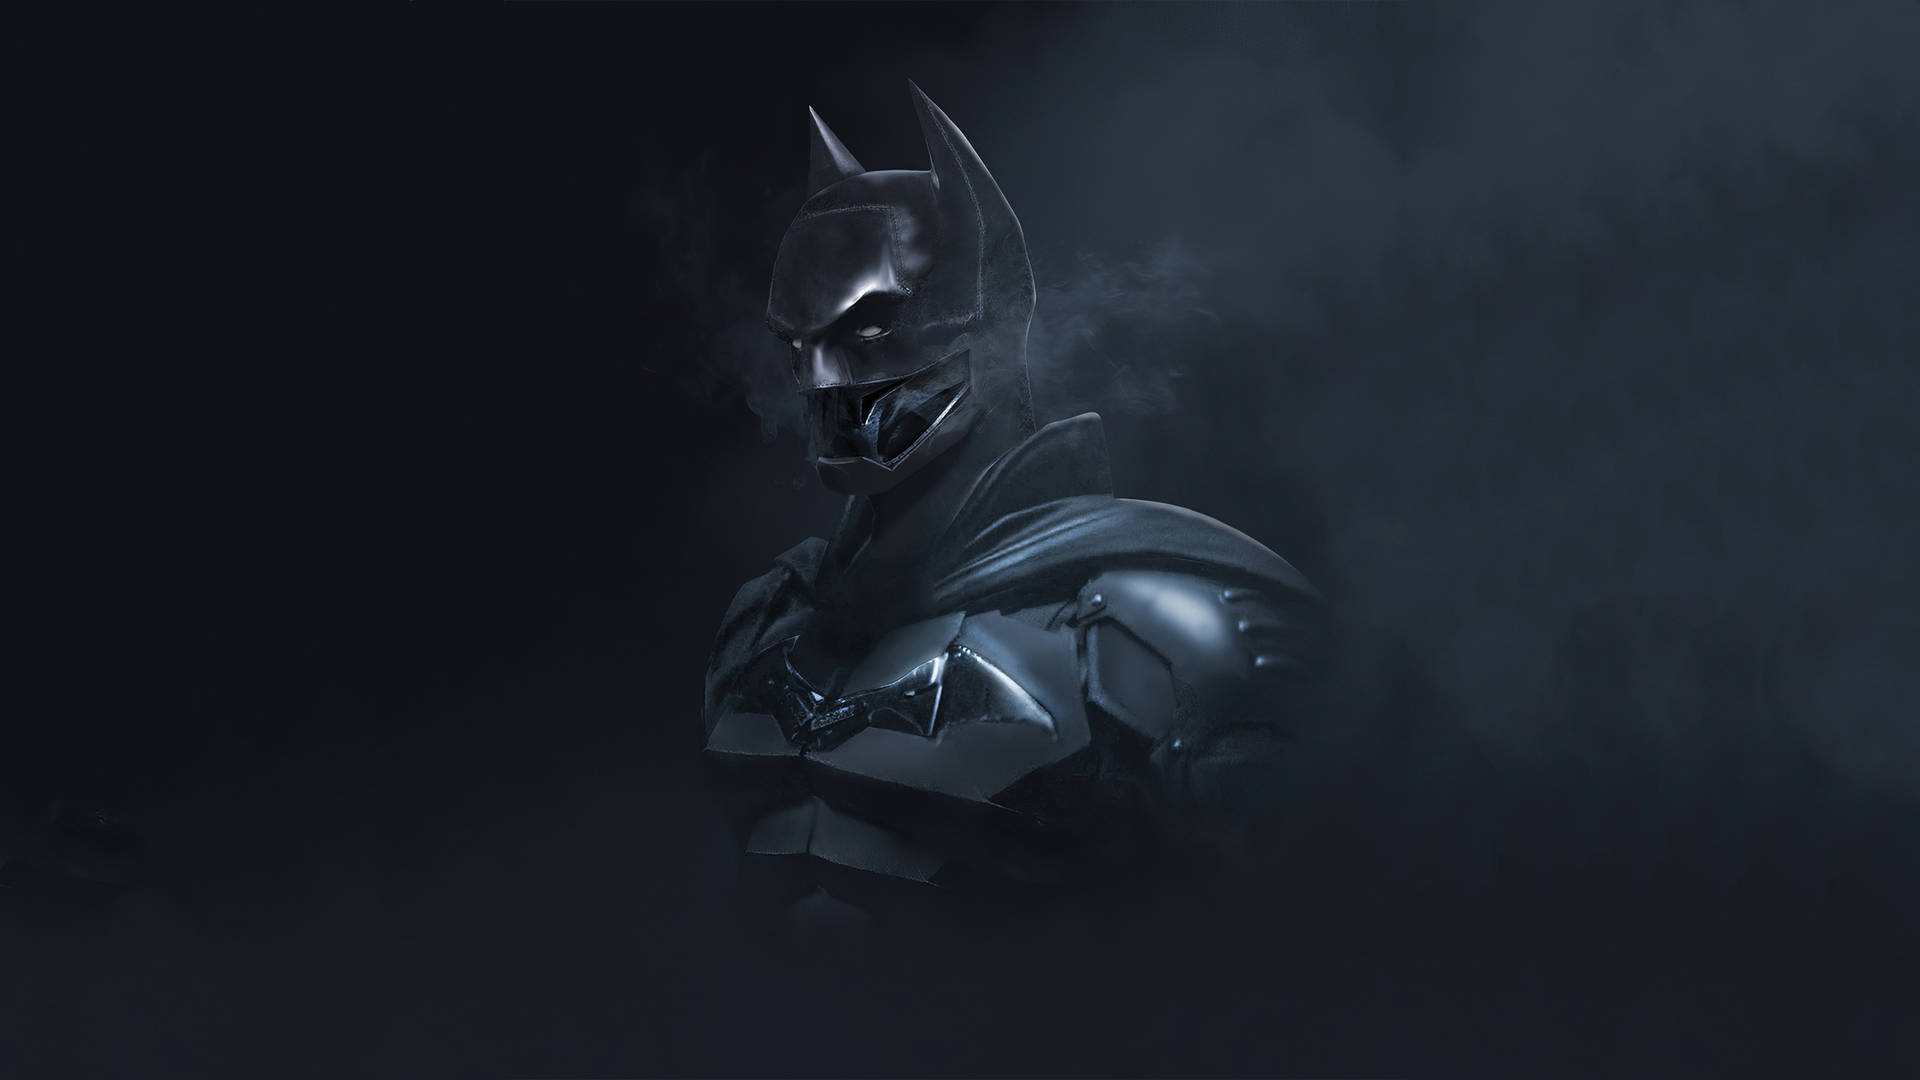 "Dark Knight Rises" Wallpaper